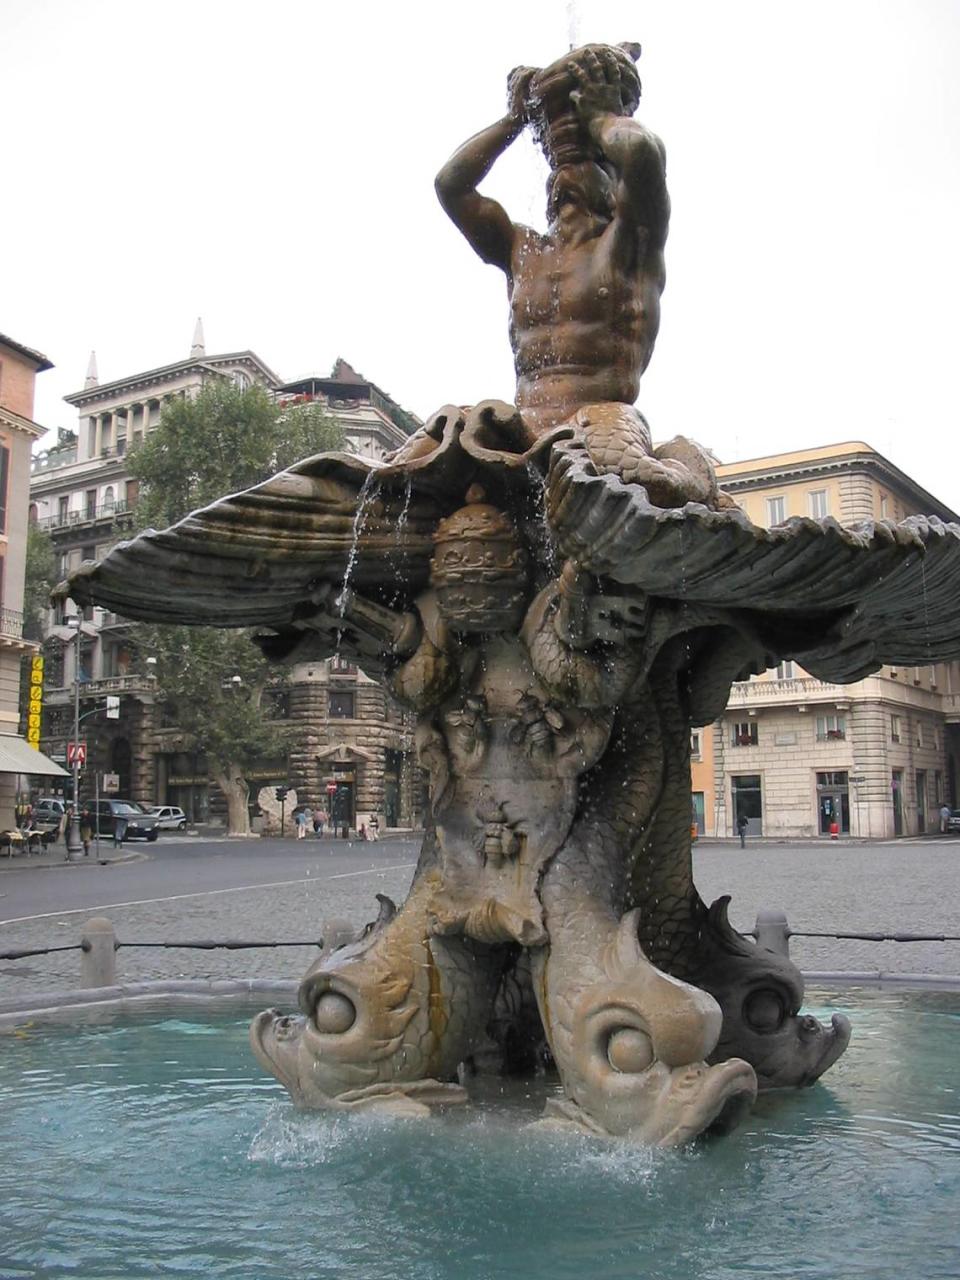 En la Plaza Barberini se puede ver la Fuente del Tritón del maestro del barroco italiano, Gian Lorenzo Bernini.